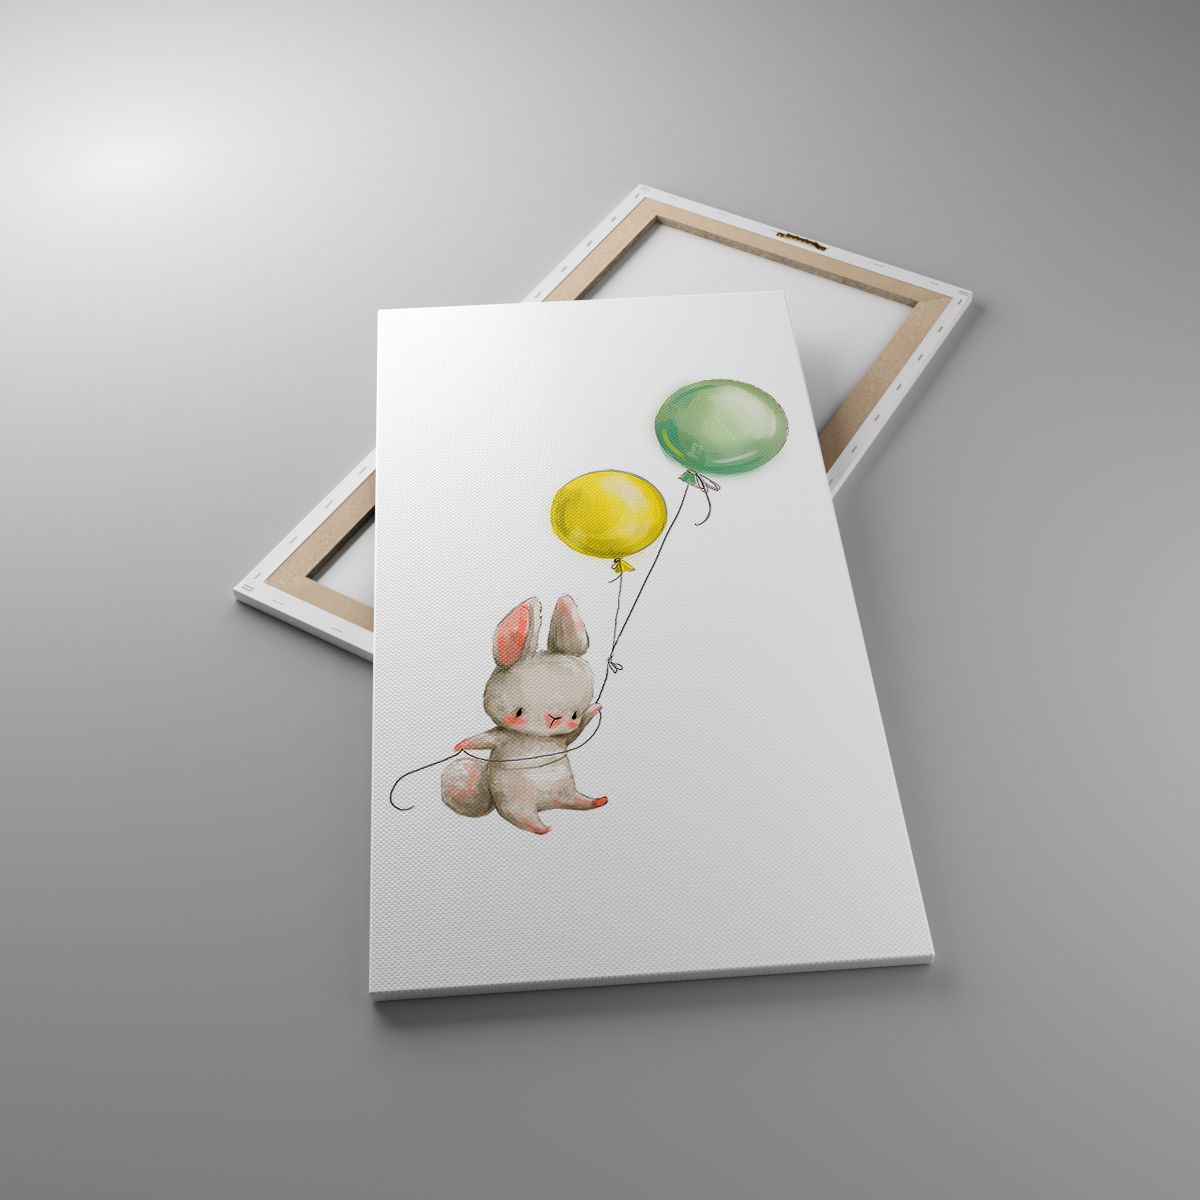 Leinwandbild Für Kinder, Leinwandbild Kaninchen, Leinwandbild Bunte Luftballons, Leinwandbild Freundschaft, Leinwandbild Liebe